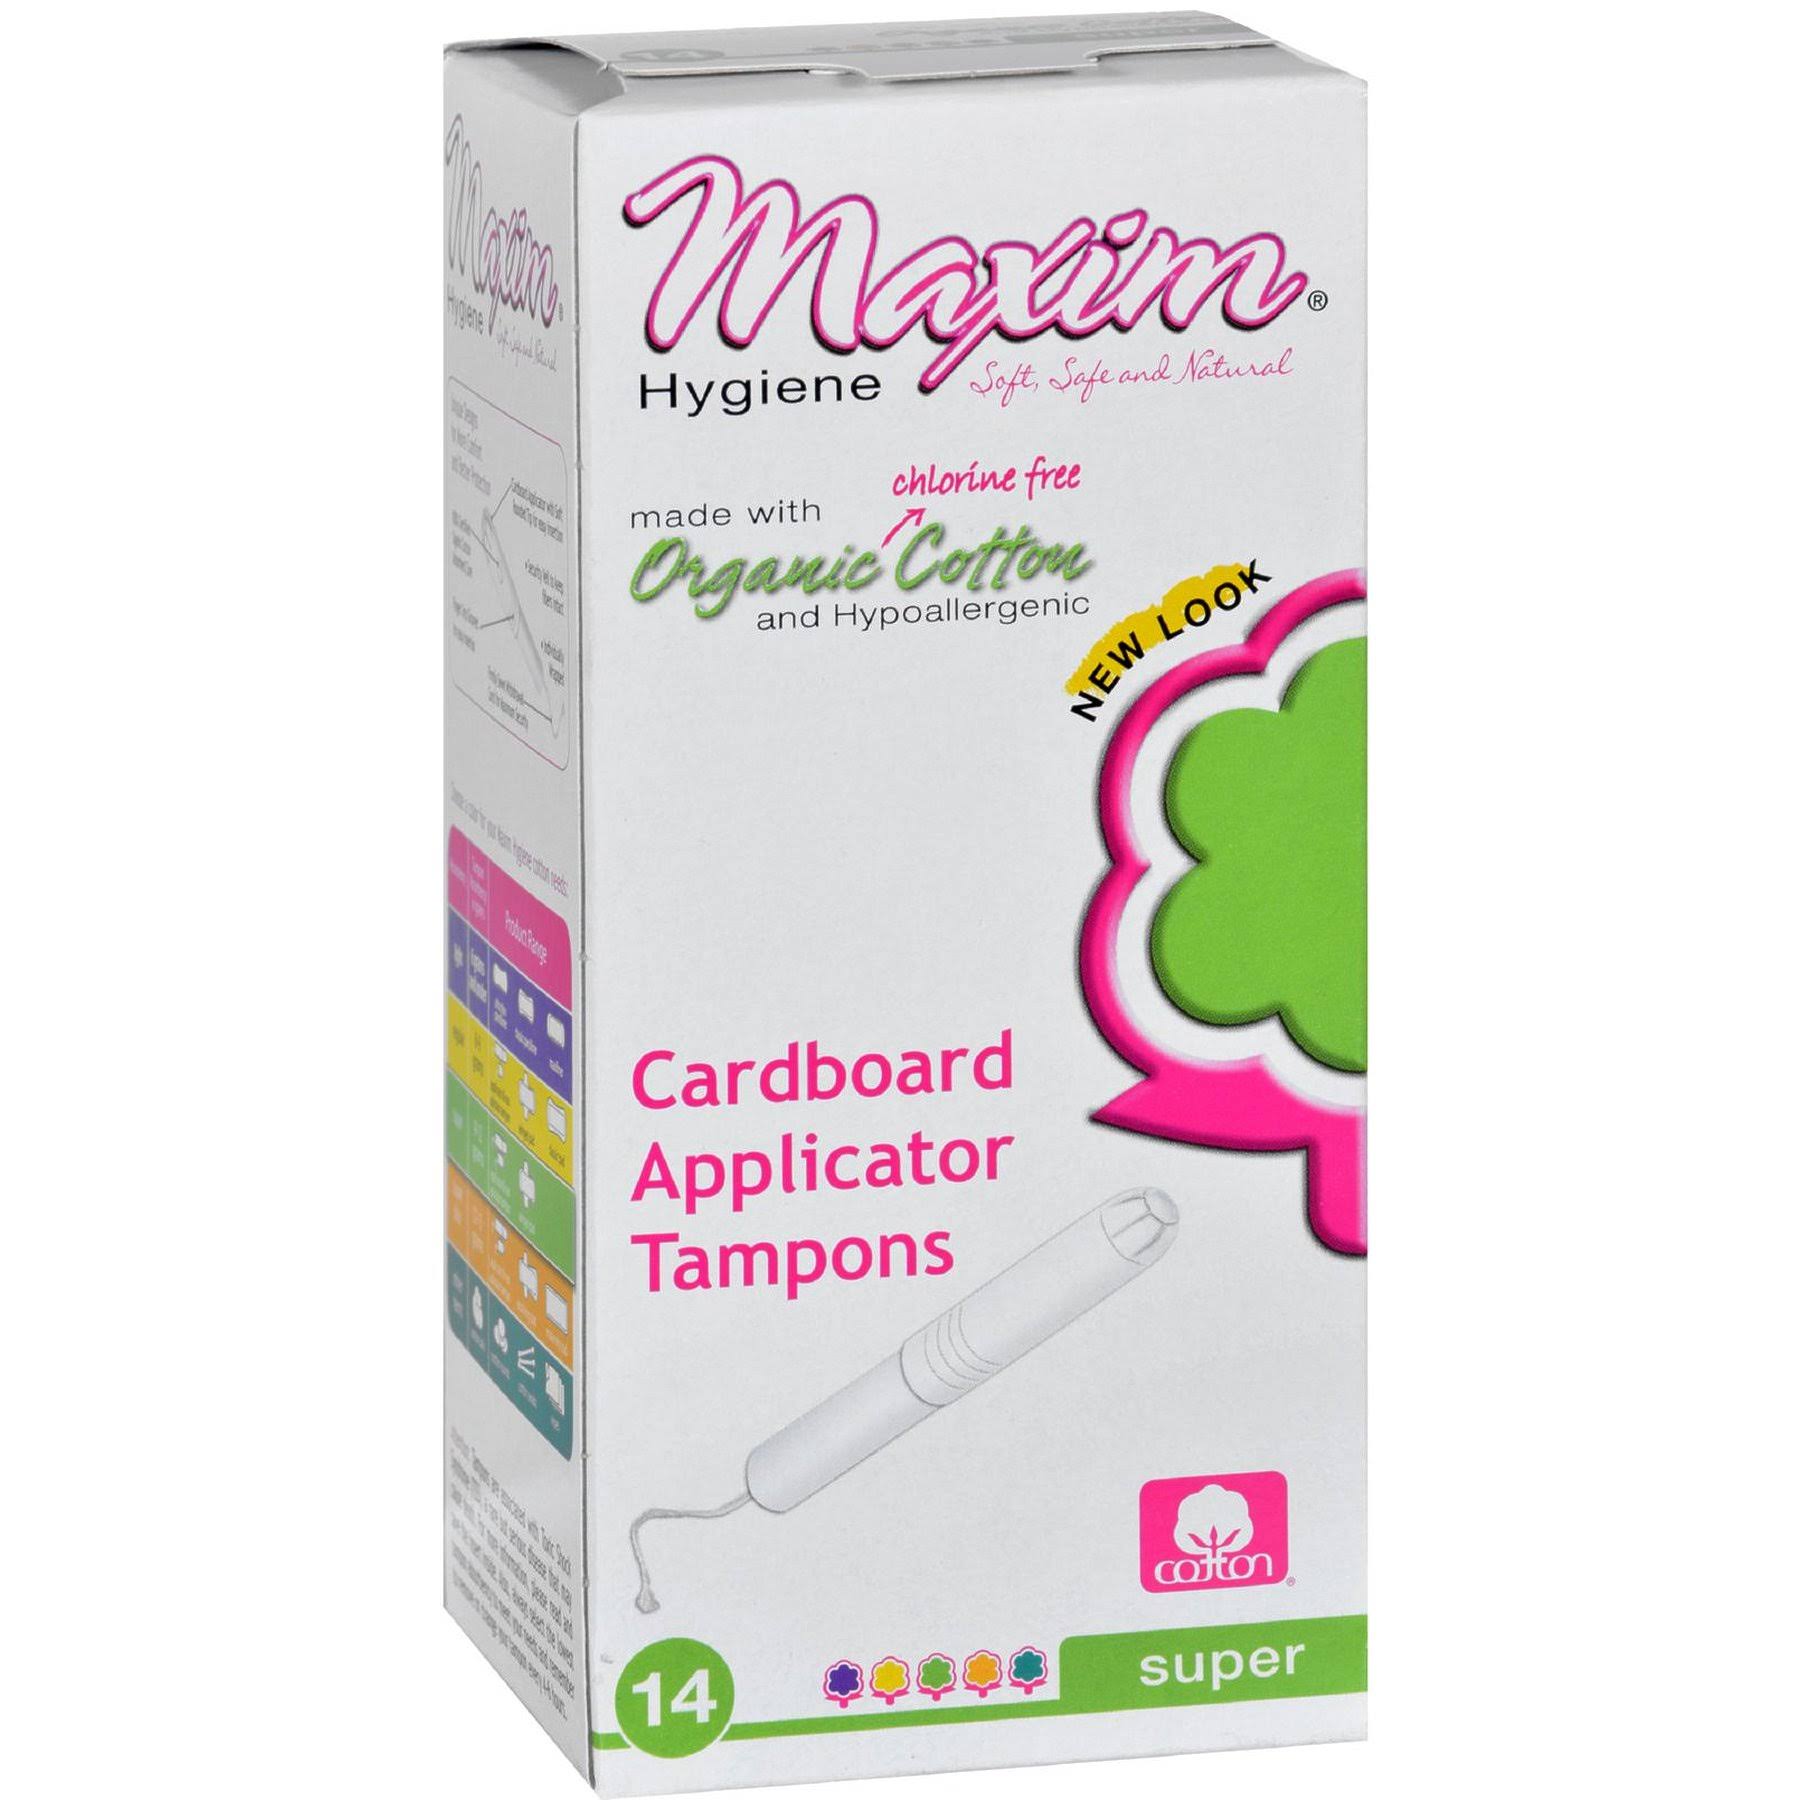 Maxim Hygiene Organic Cotton Tampons - Super, Cardboard Applicator, 14ct